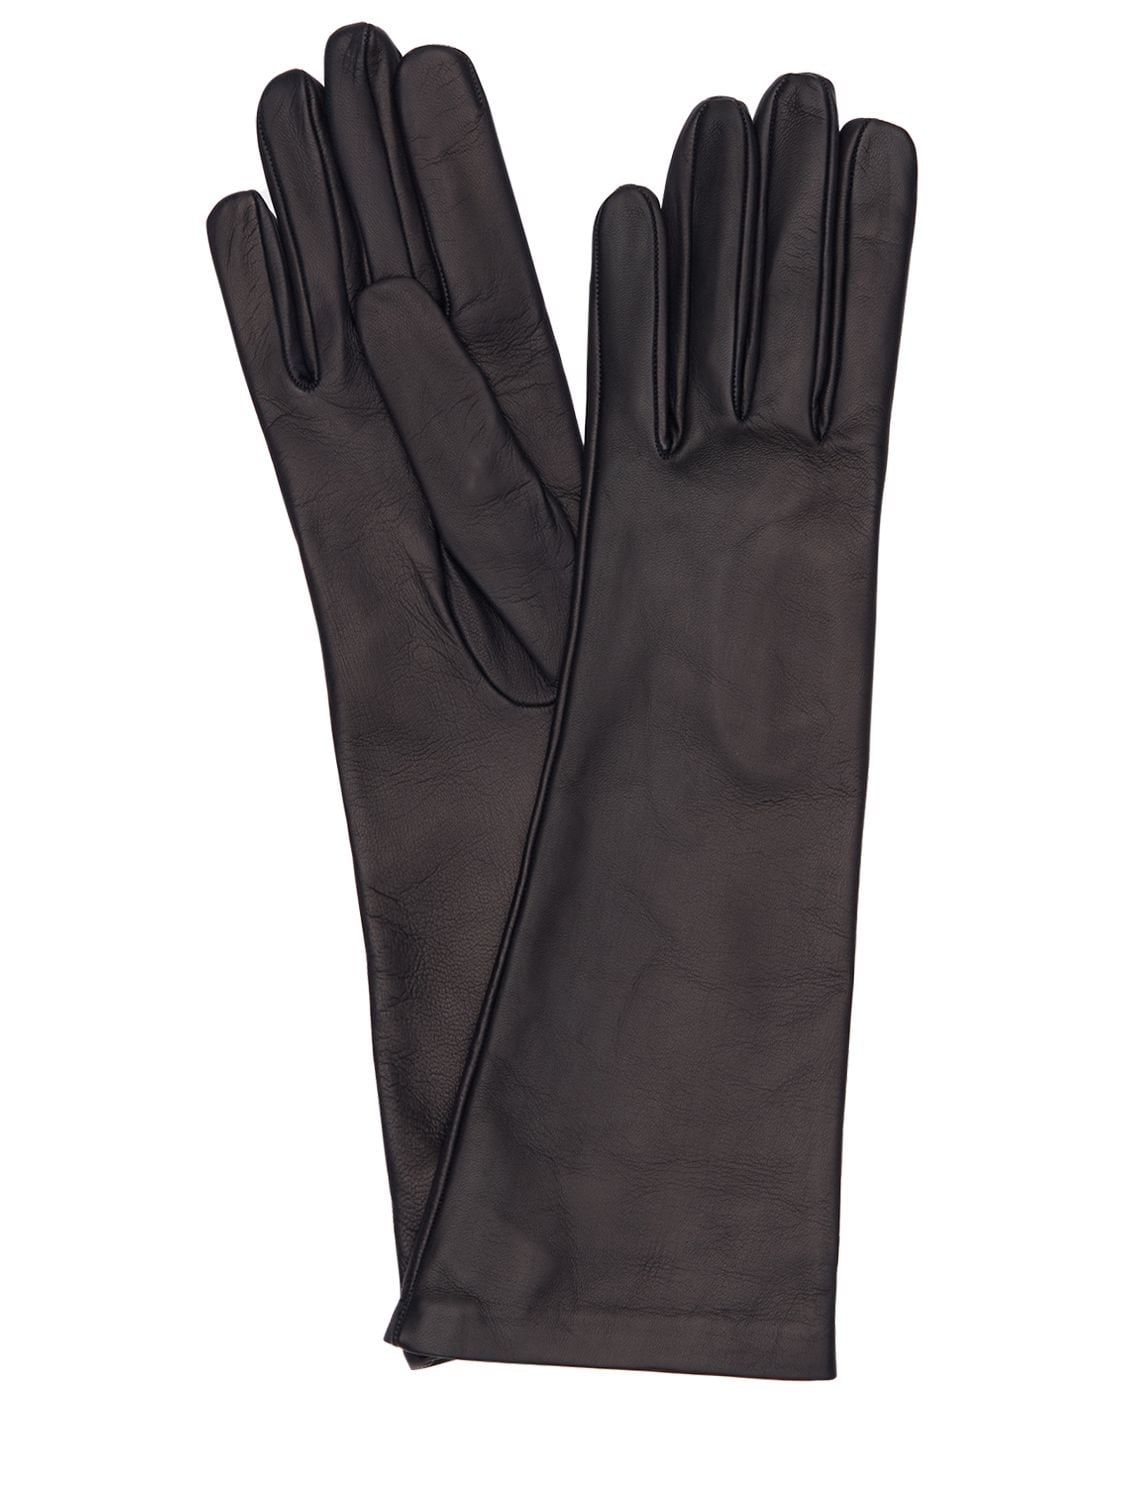 Mario Portolano Long Leather Gloves In Navy